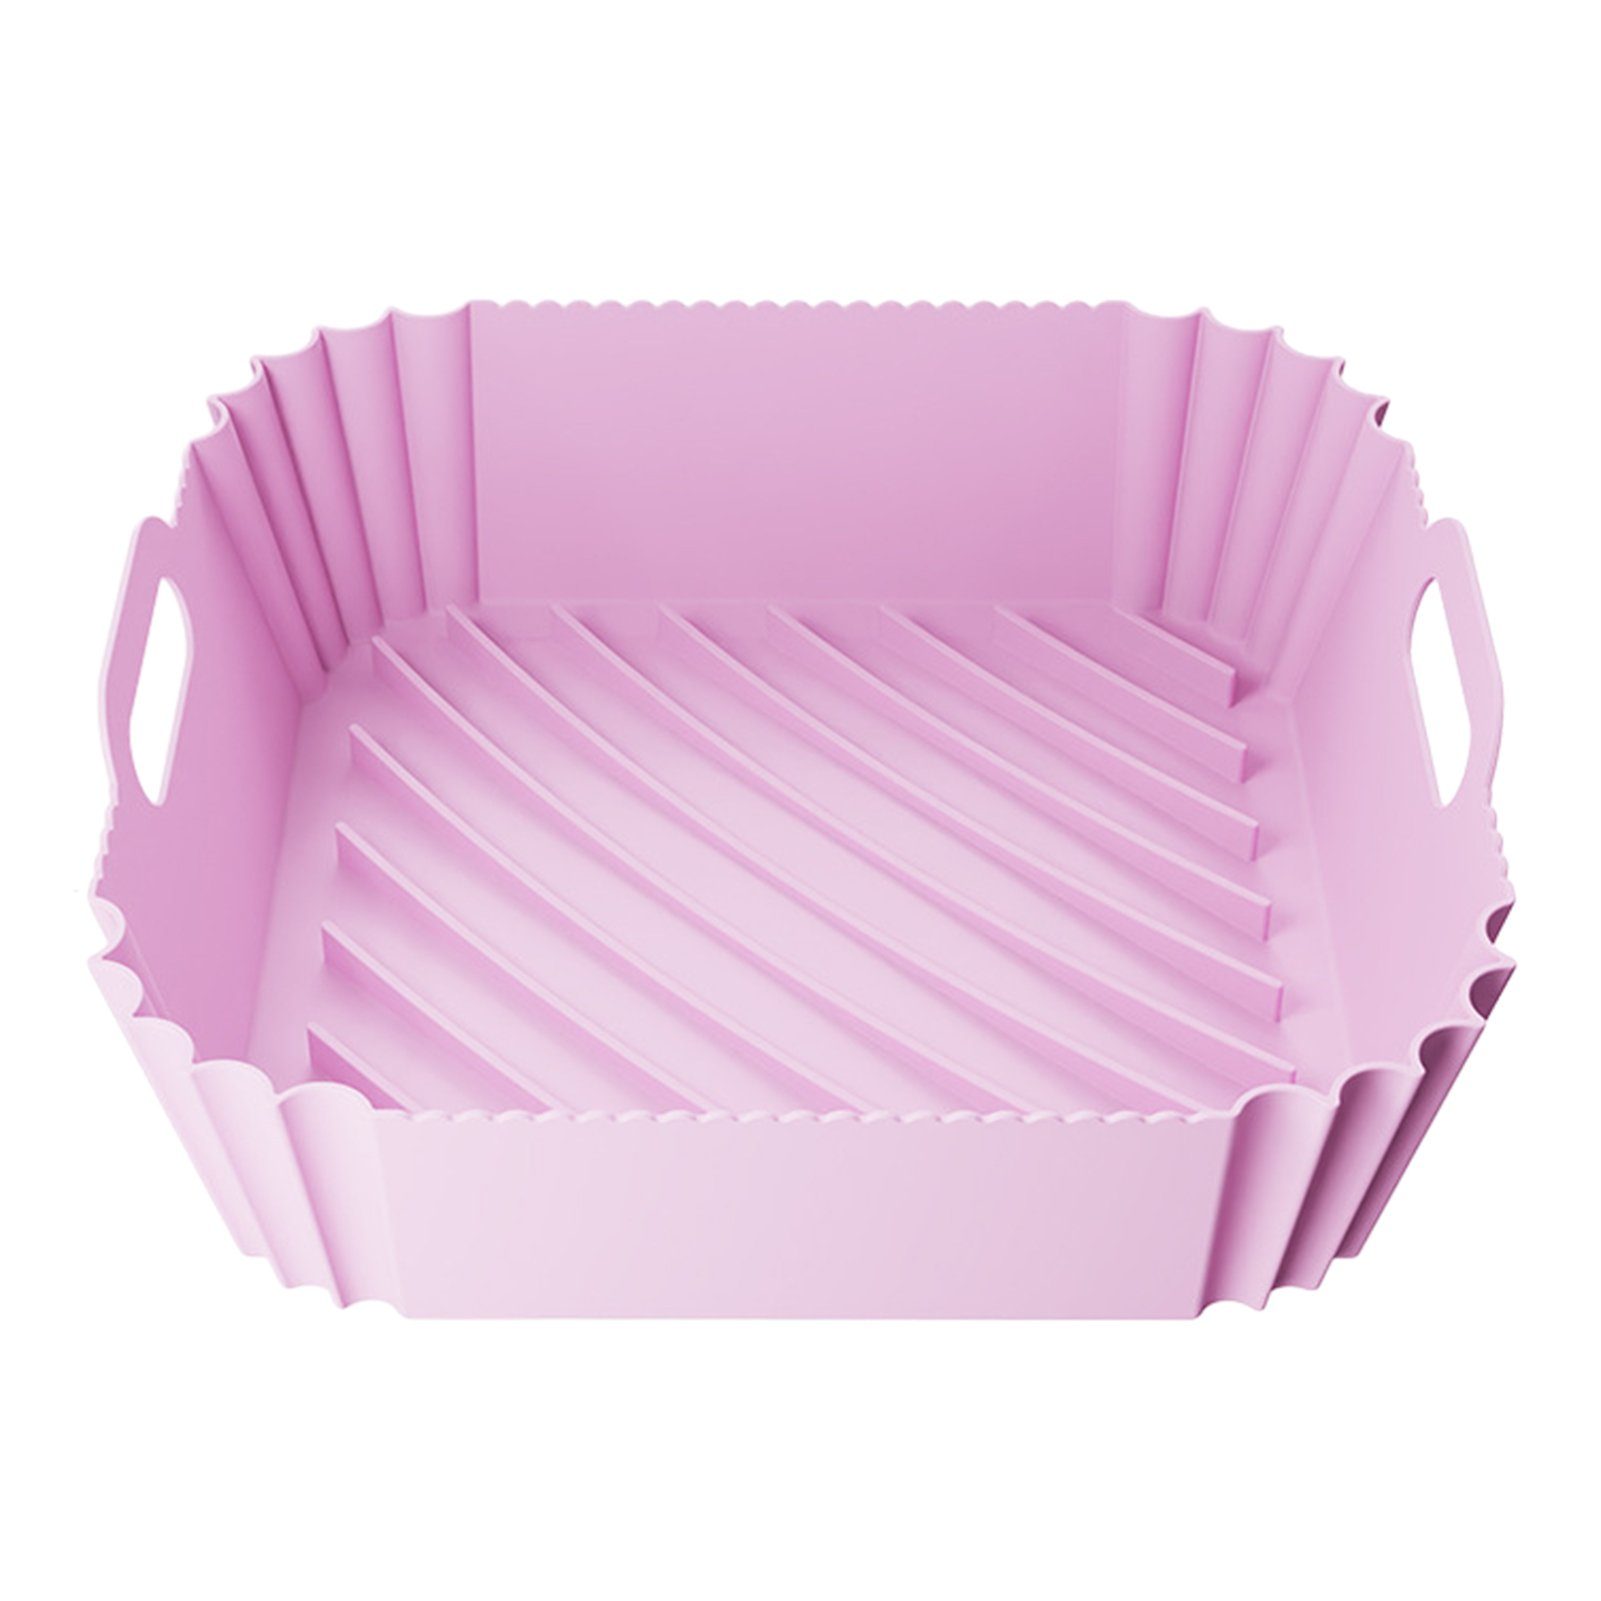 pink Silikon-Antihaft-Luftfritteuse-Tablett Mit Hoher Backmatte Blusmart Quadratisches